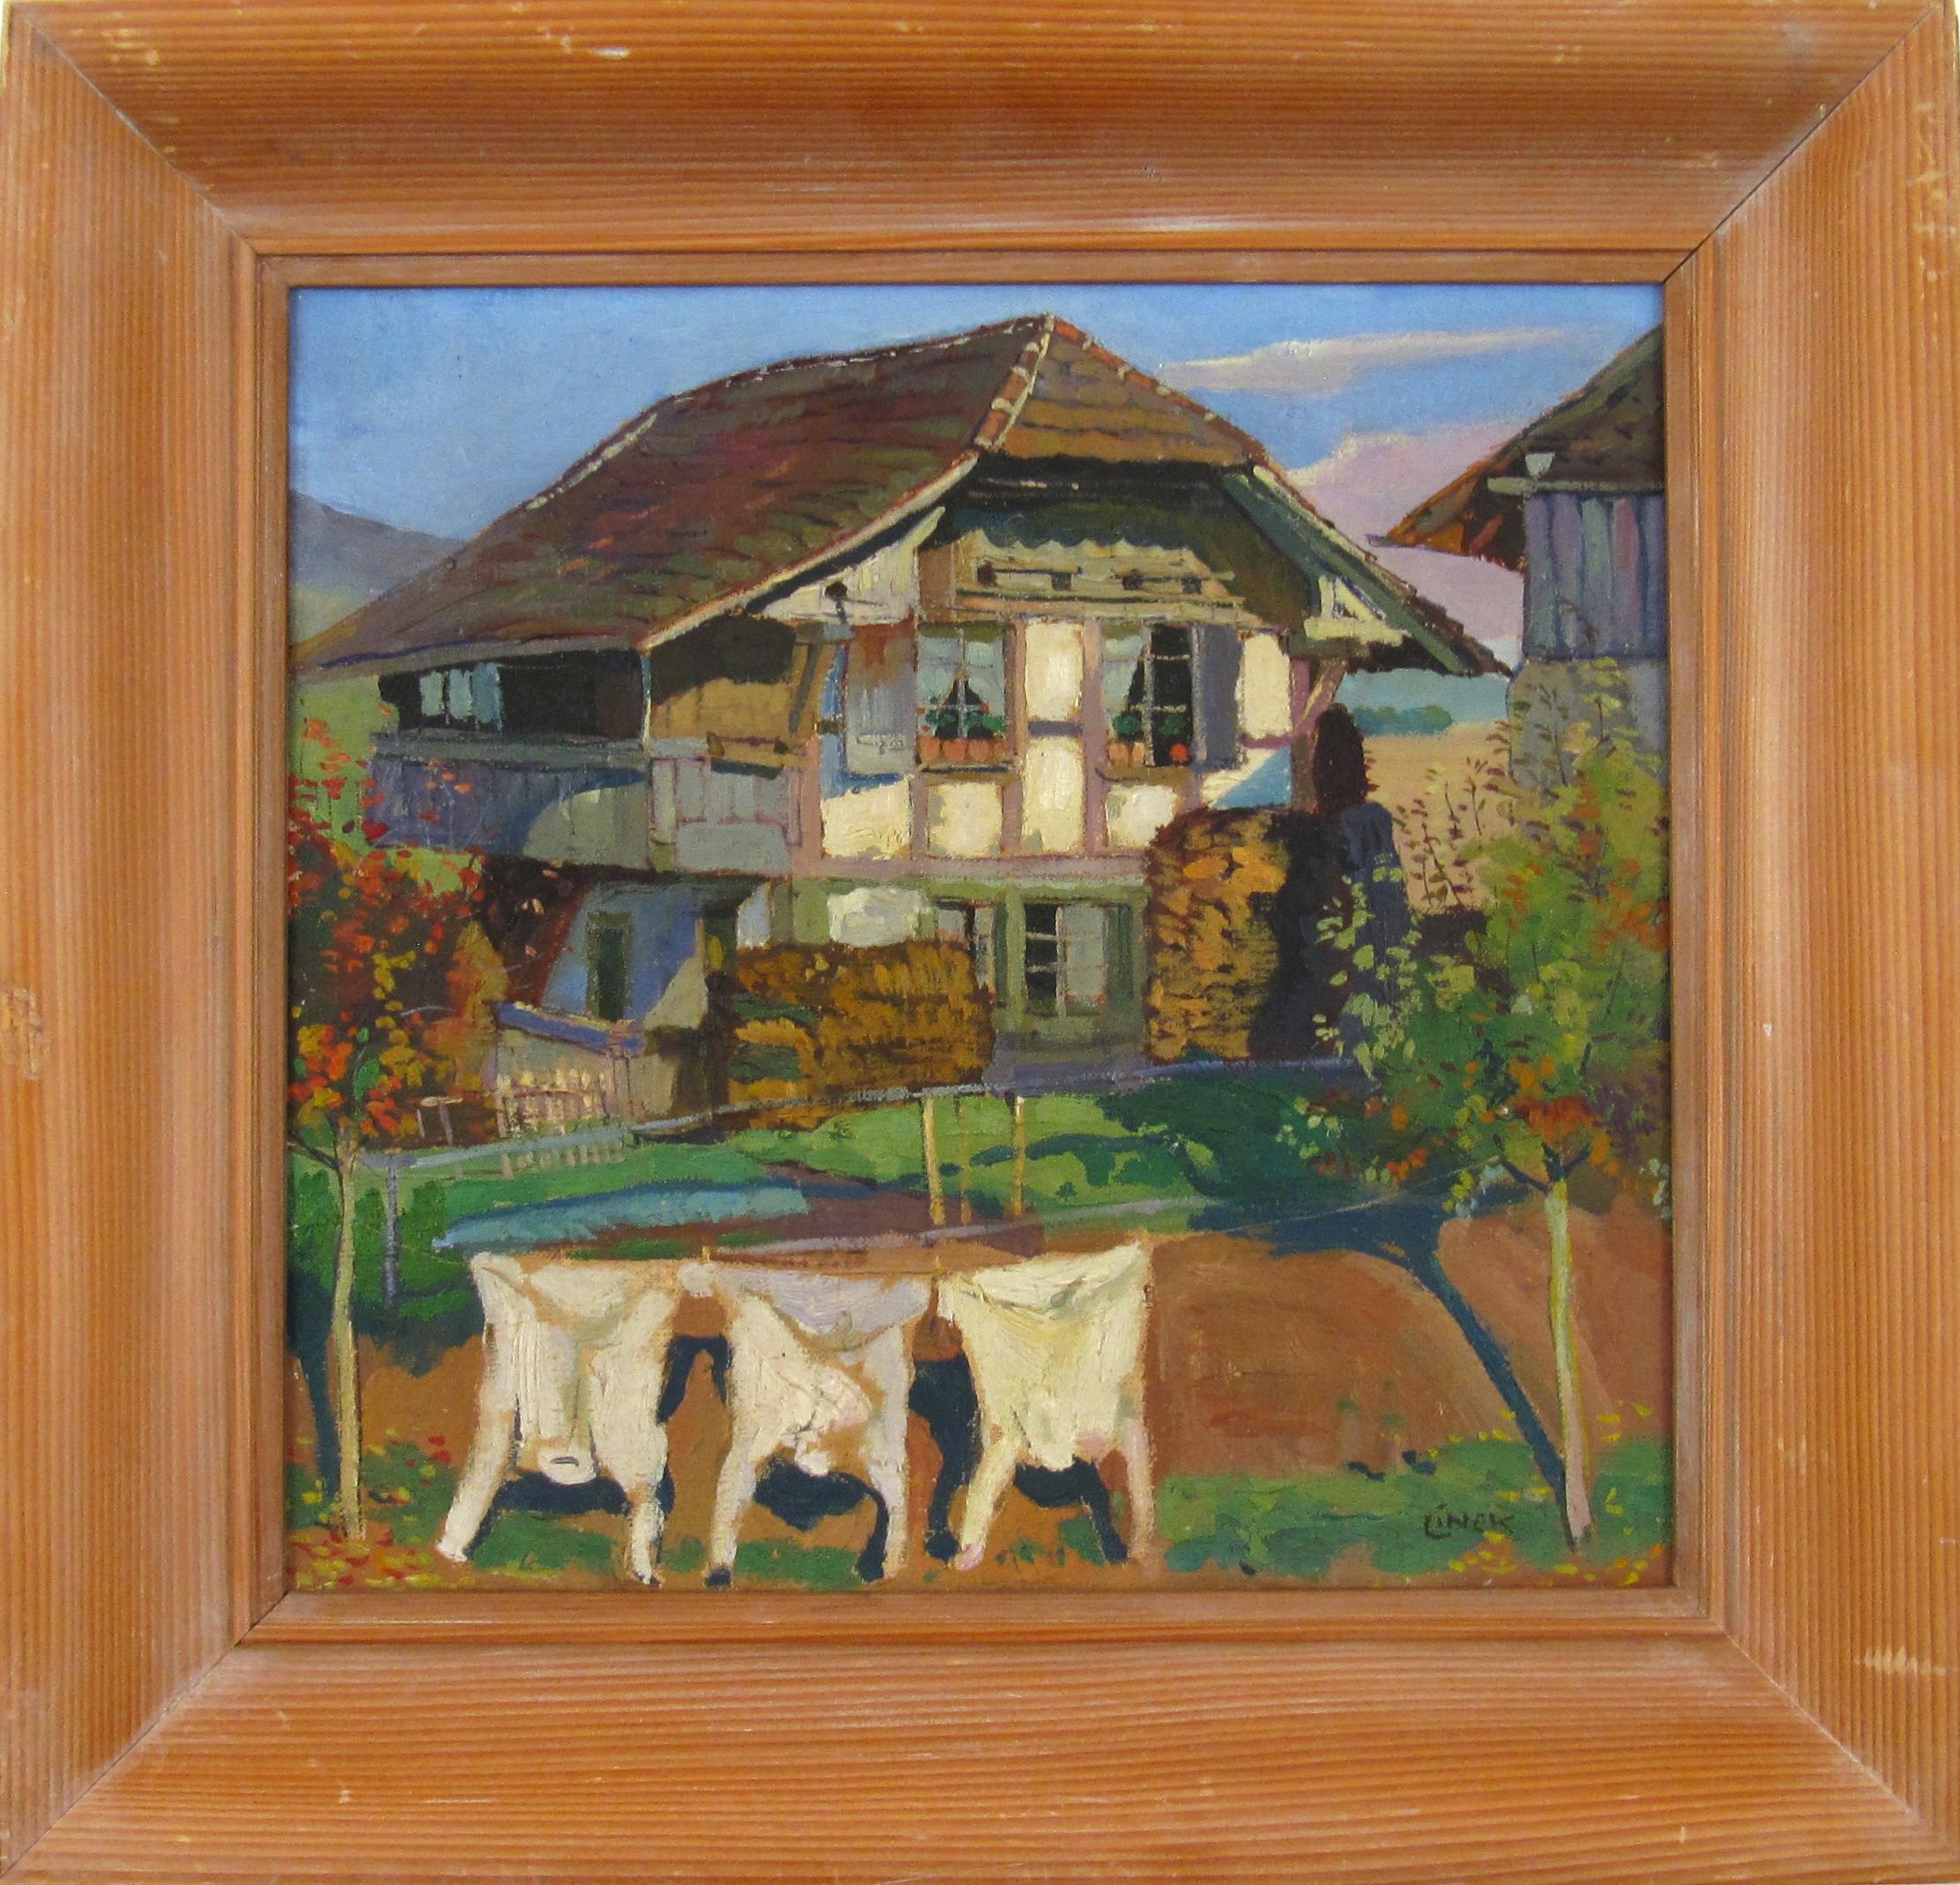 Ernst LINCK (1874 - 1935) Farmhouse with Clothesline School of Berne Switzerland